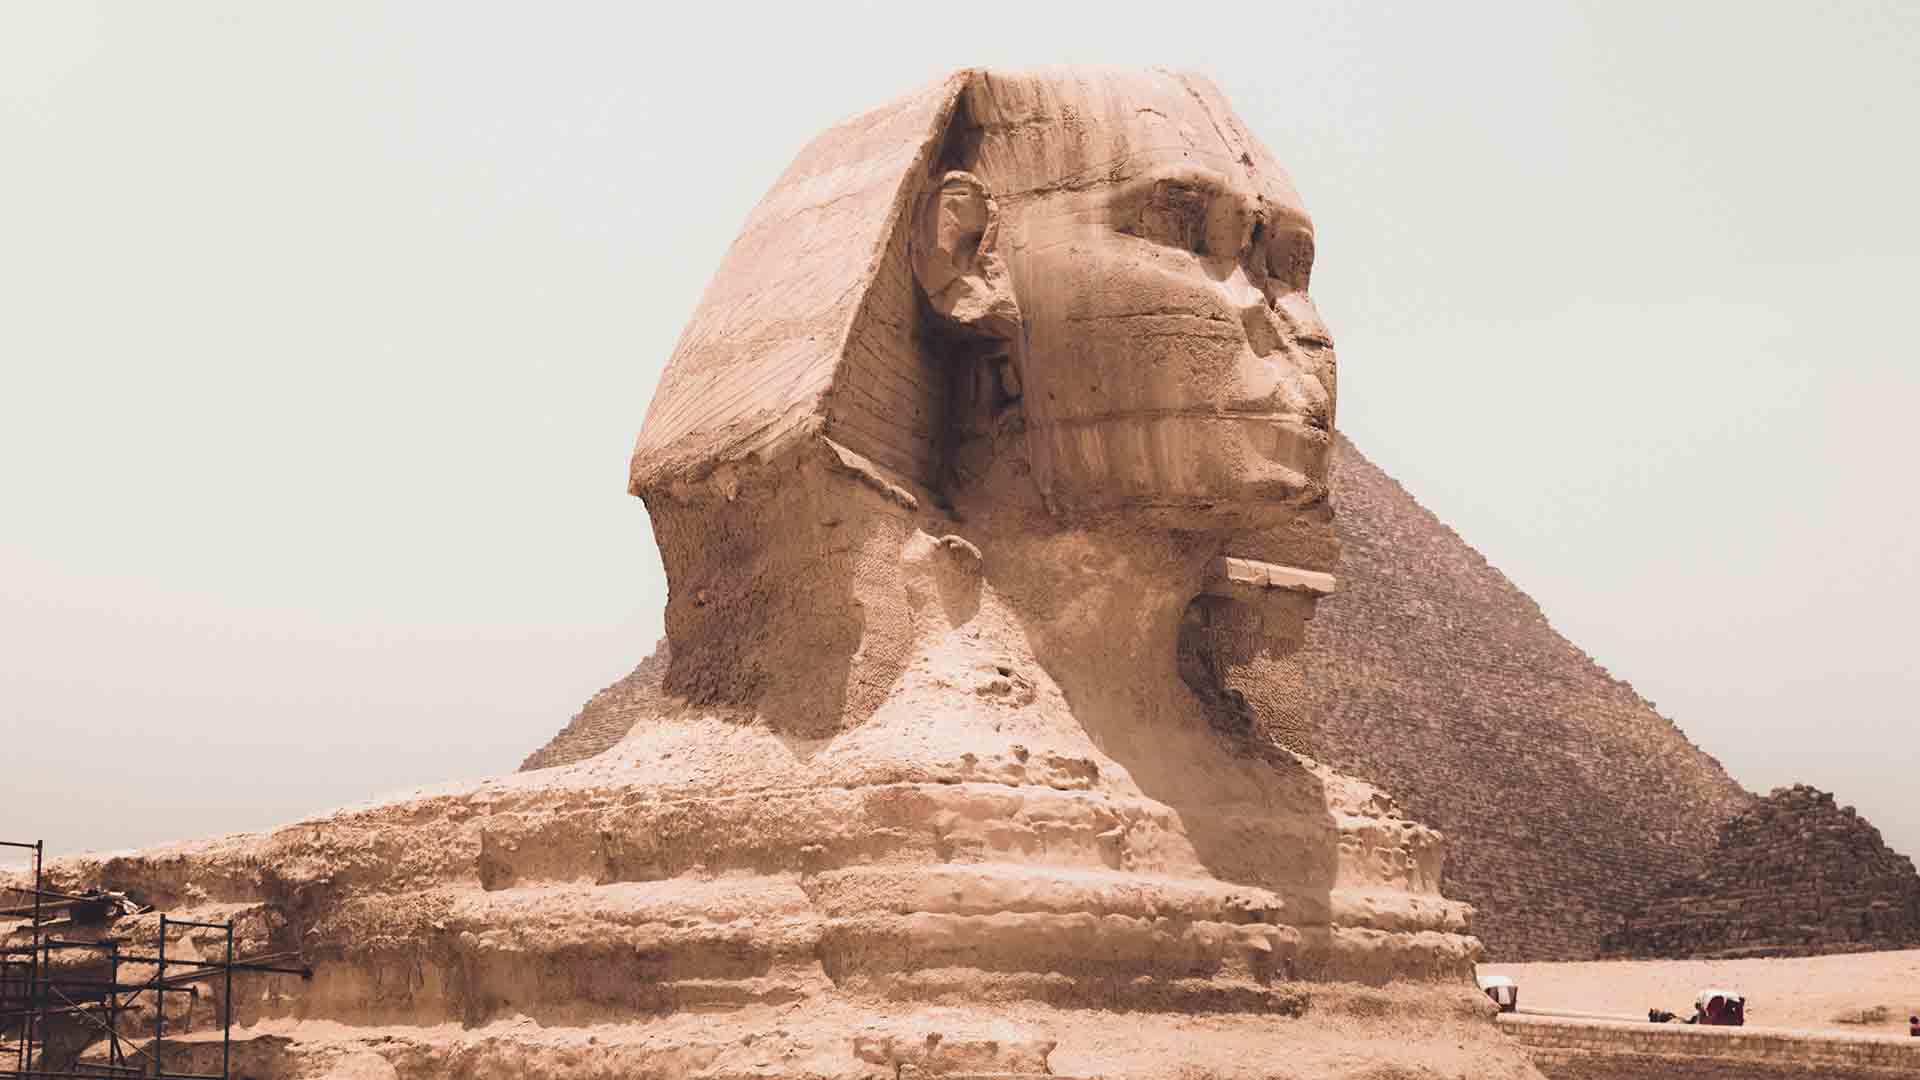 Tutankhamun statue in Egypt